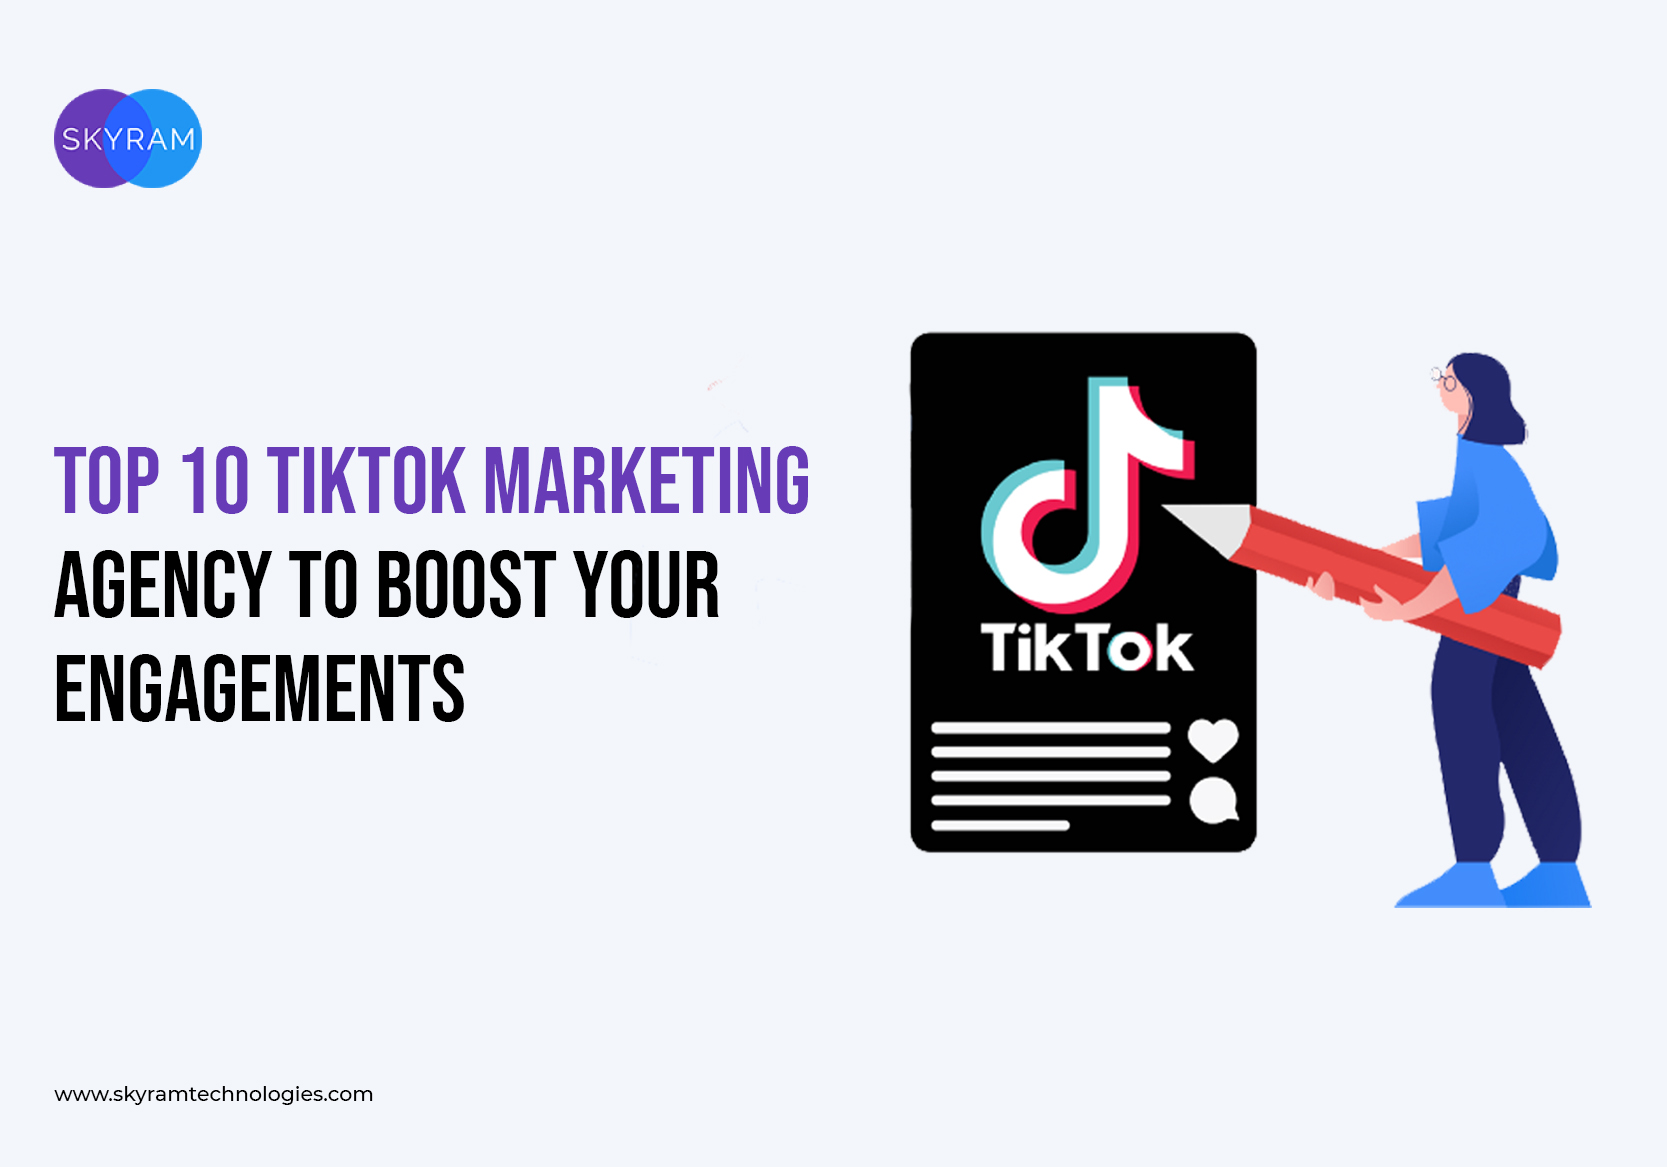 Top 10 Tiktok Marketing Agency To Promote Your Brand Online